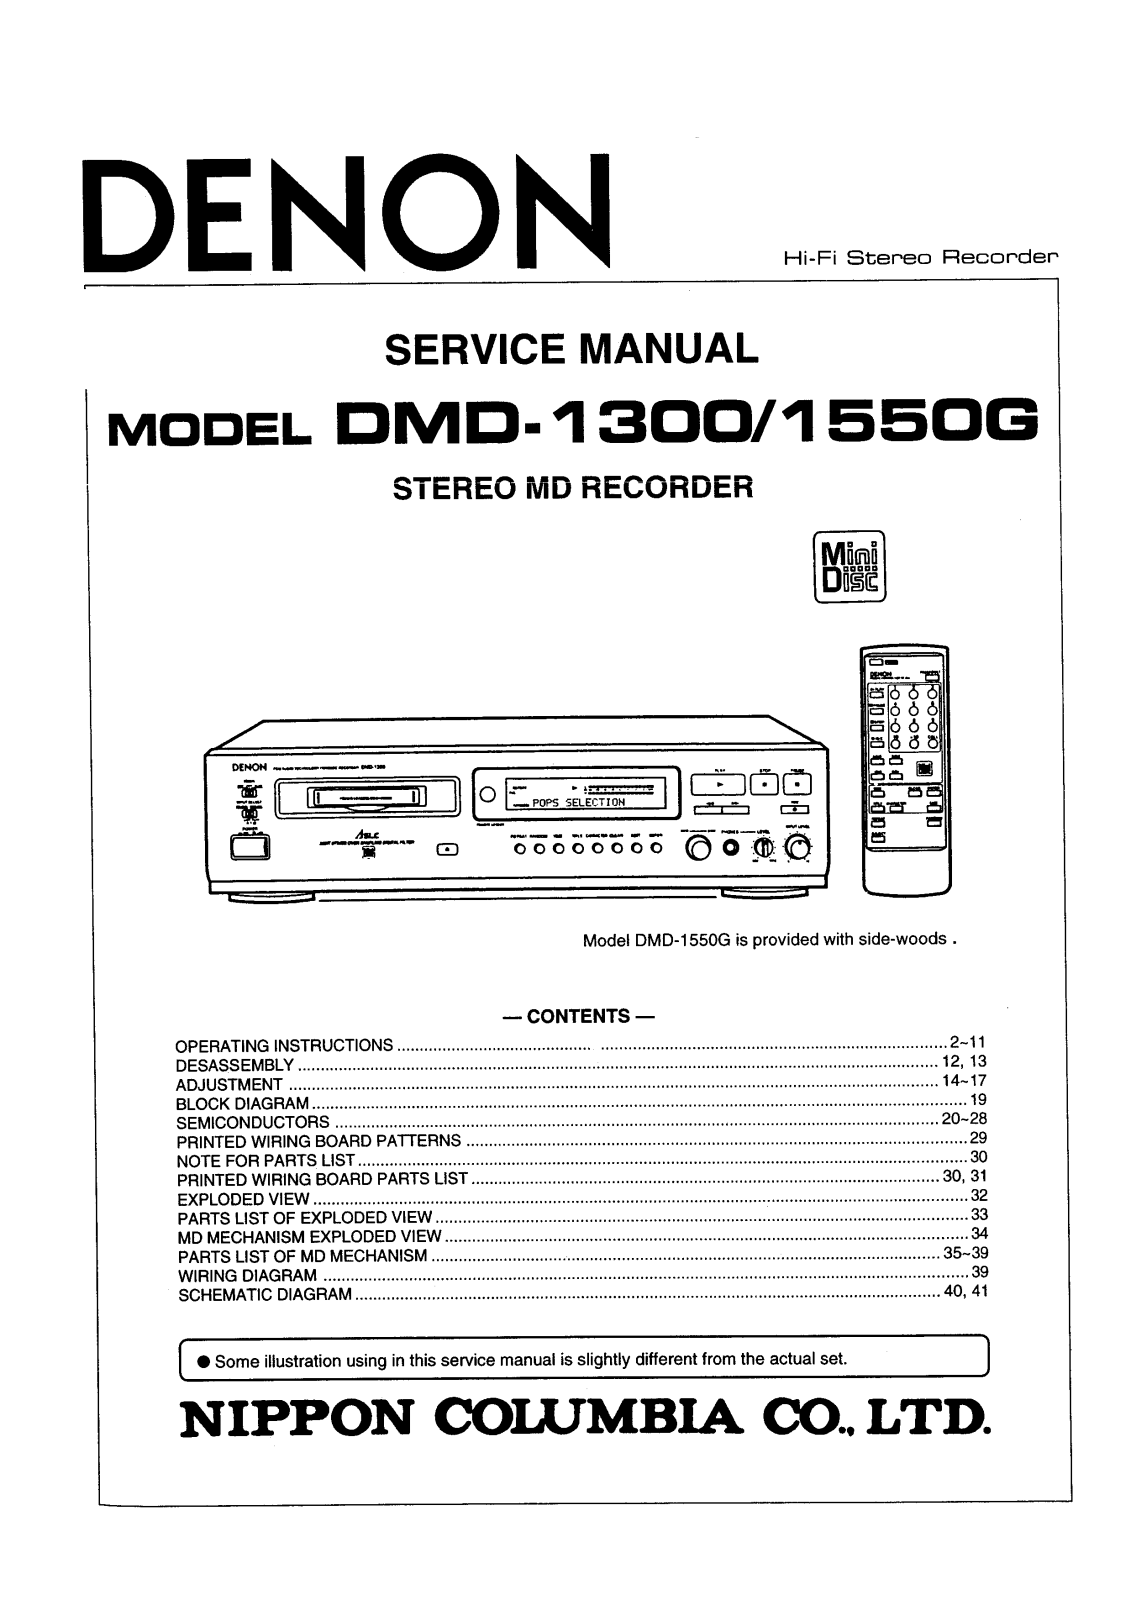 Denon DMD-1300, DMD-1550G Service Manual